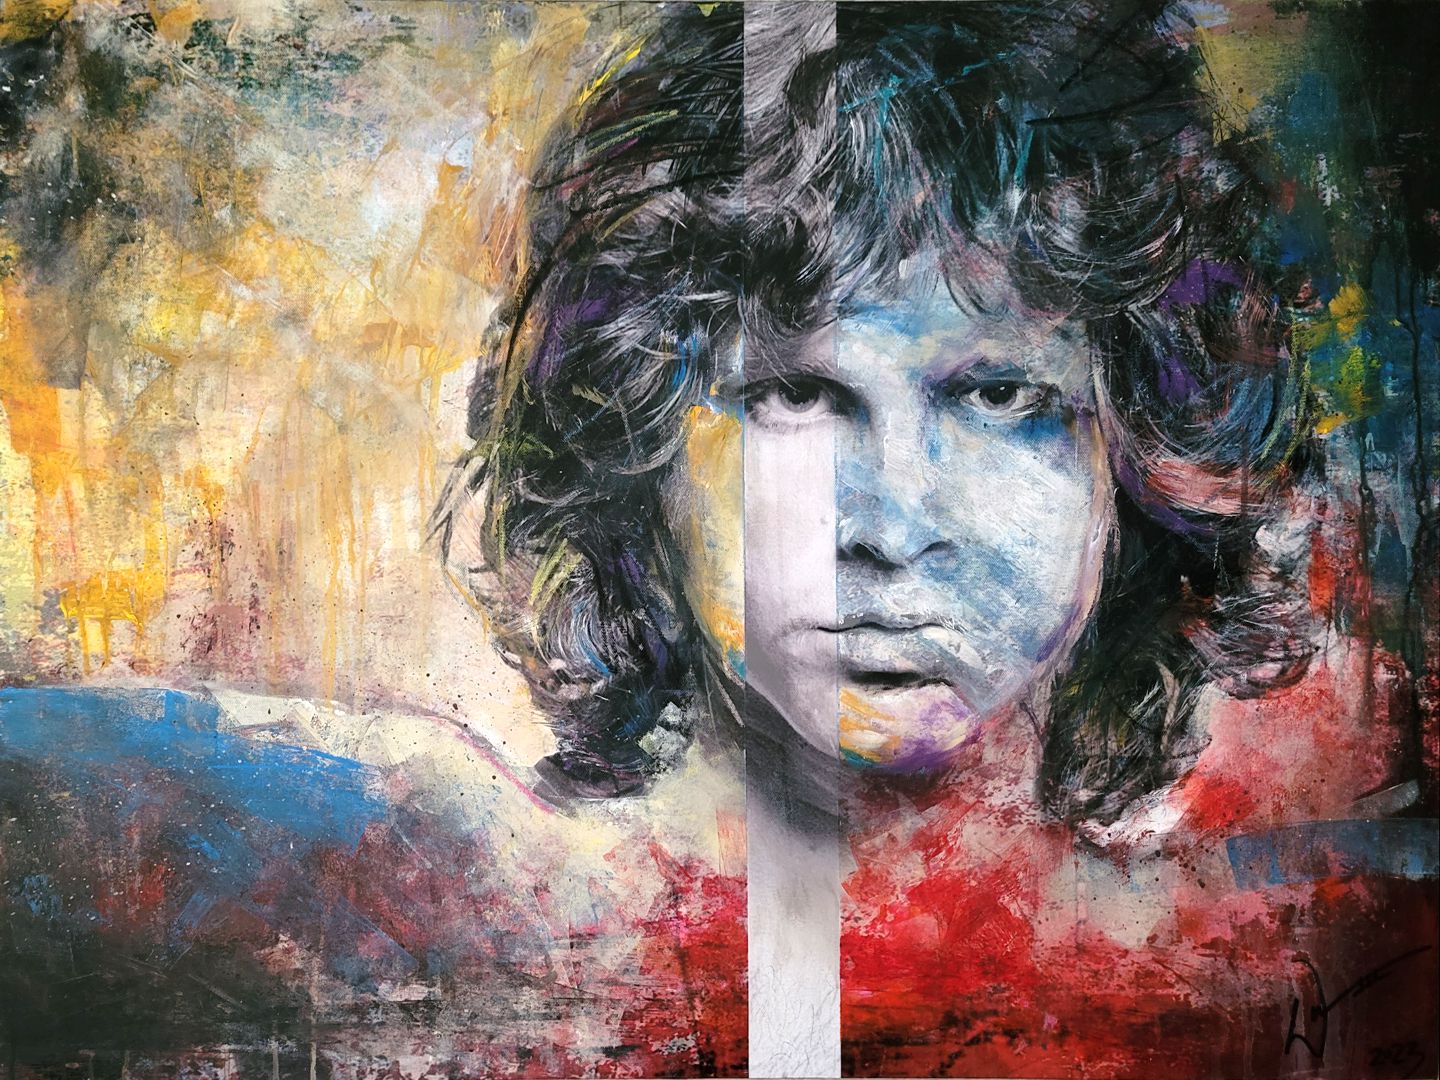 'Morrison" (Jim Morrison) painting by artist, William III